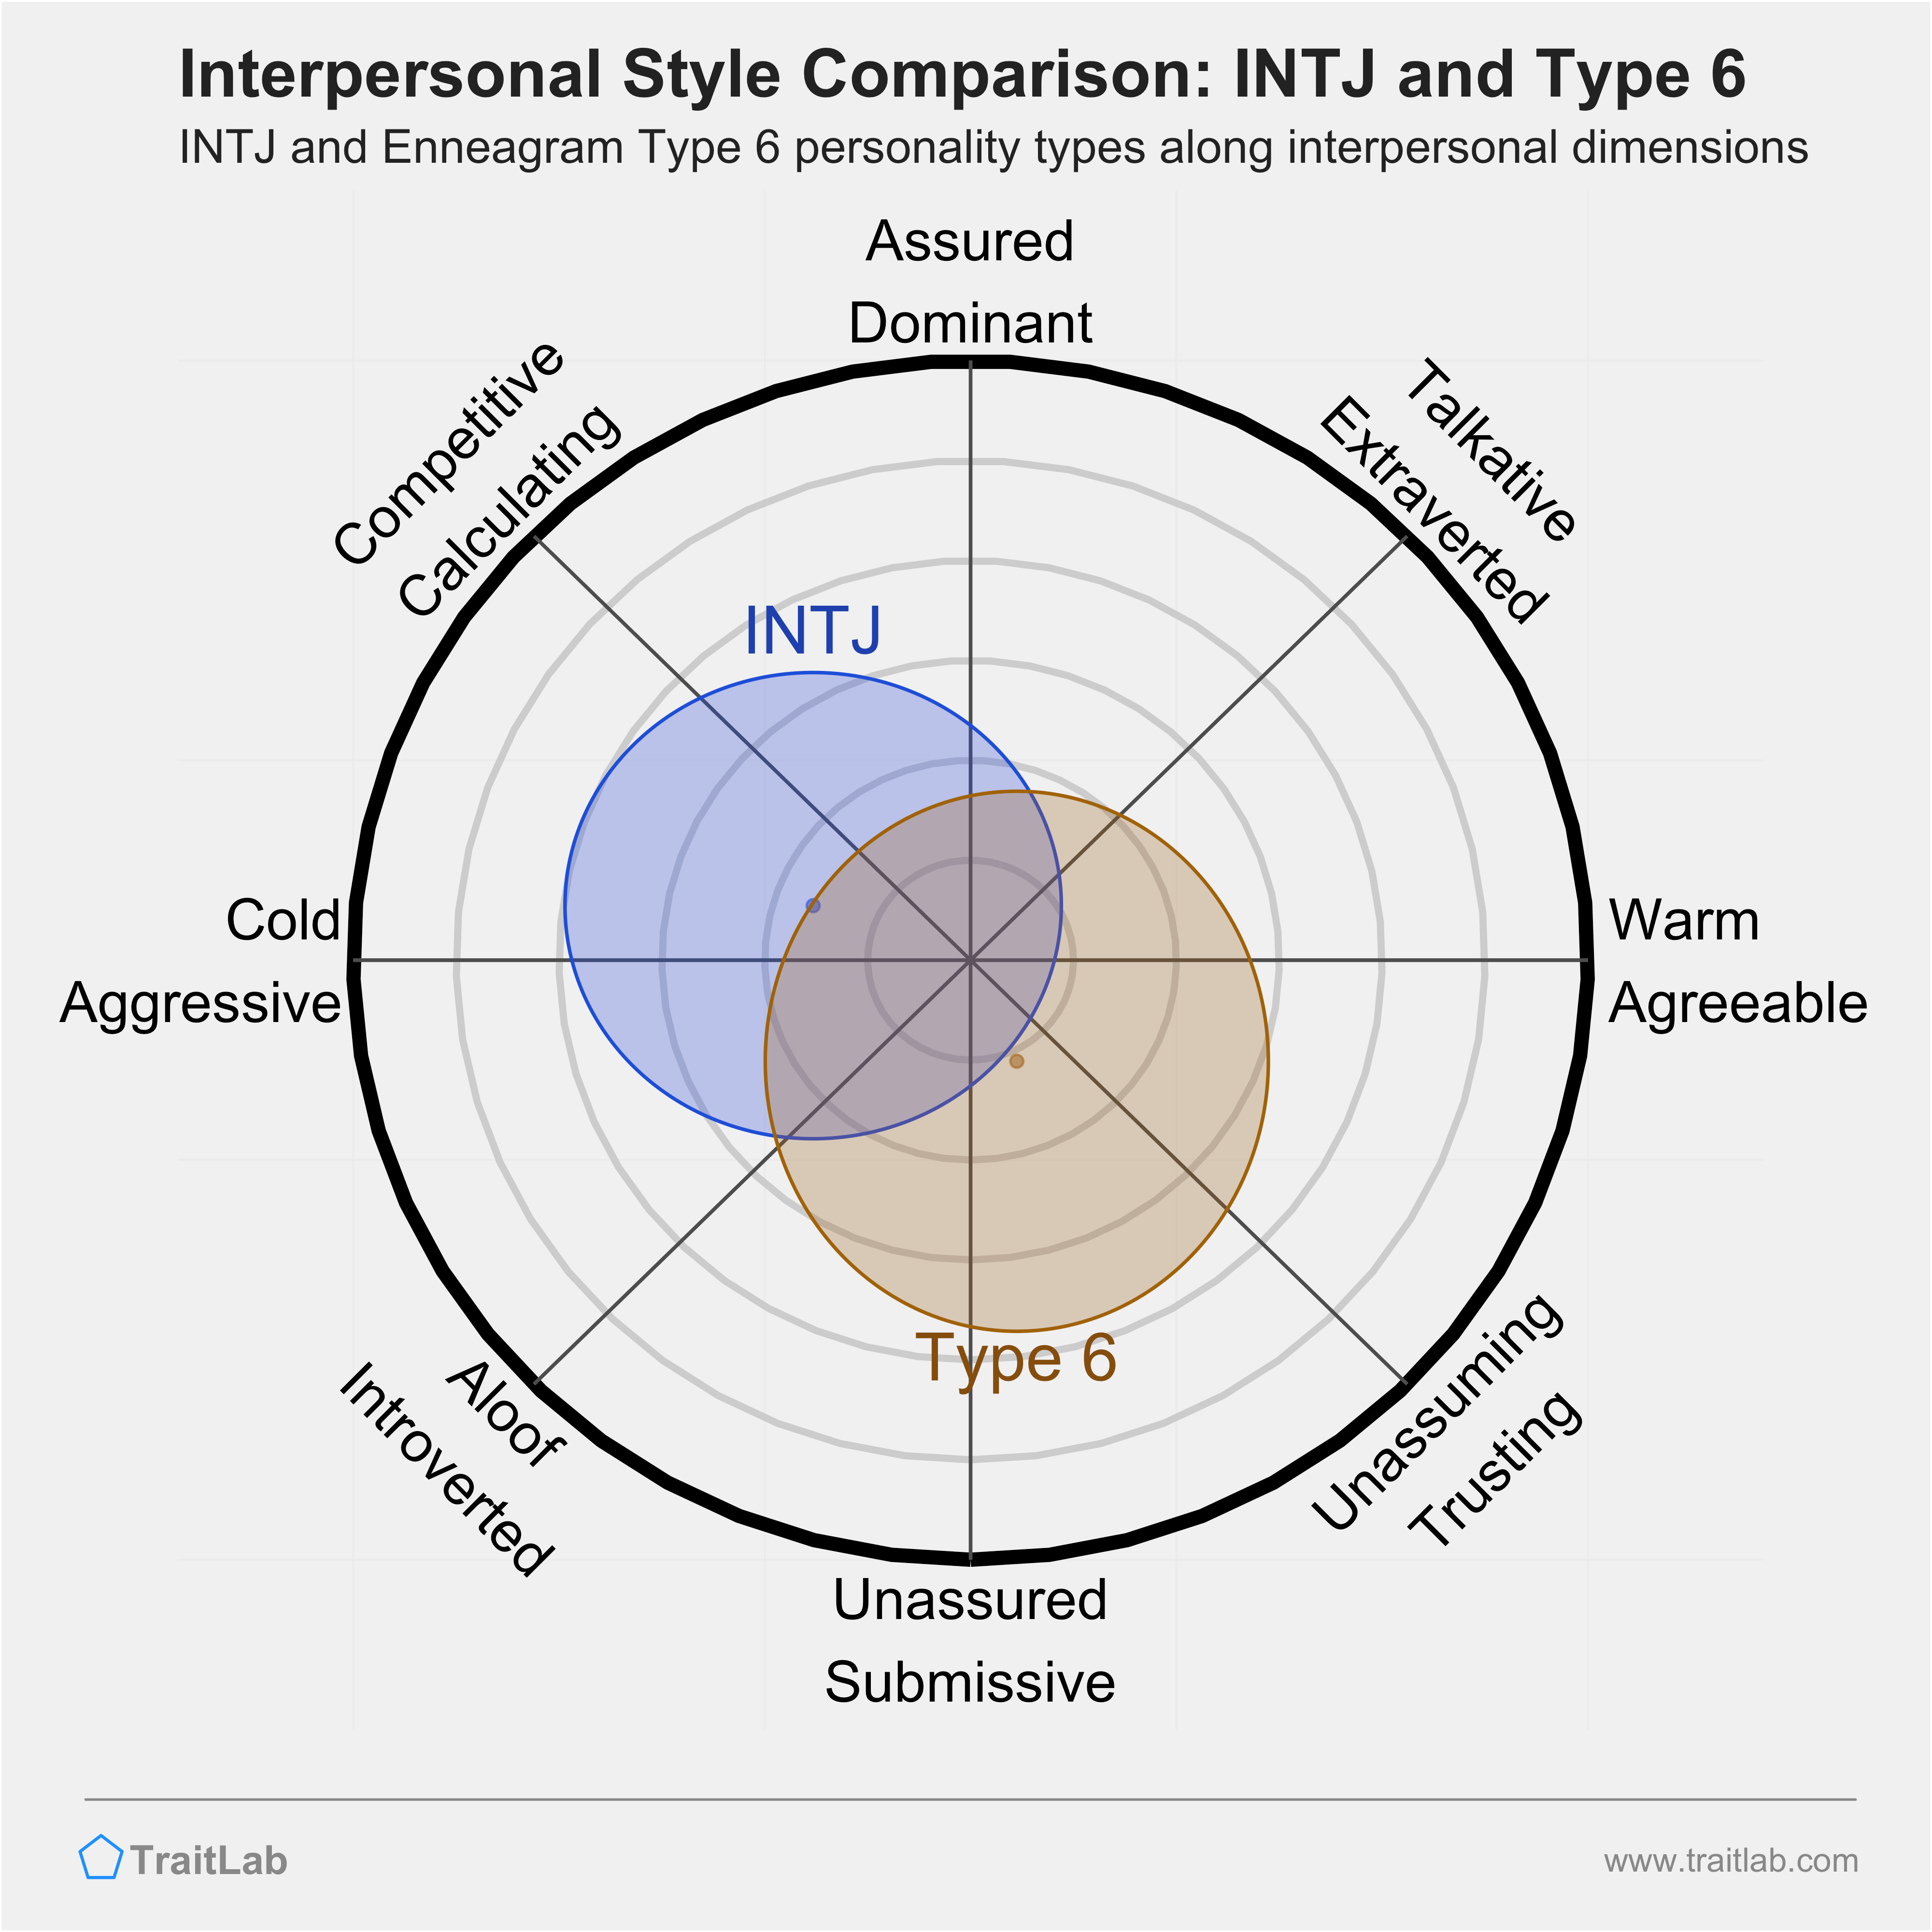 Enneagram INTJ and Type 6 comparison across interpersonal dimensions